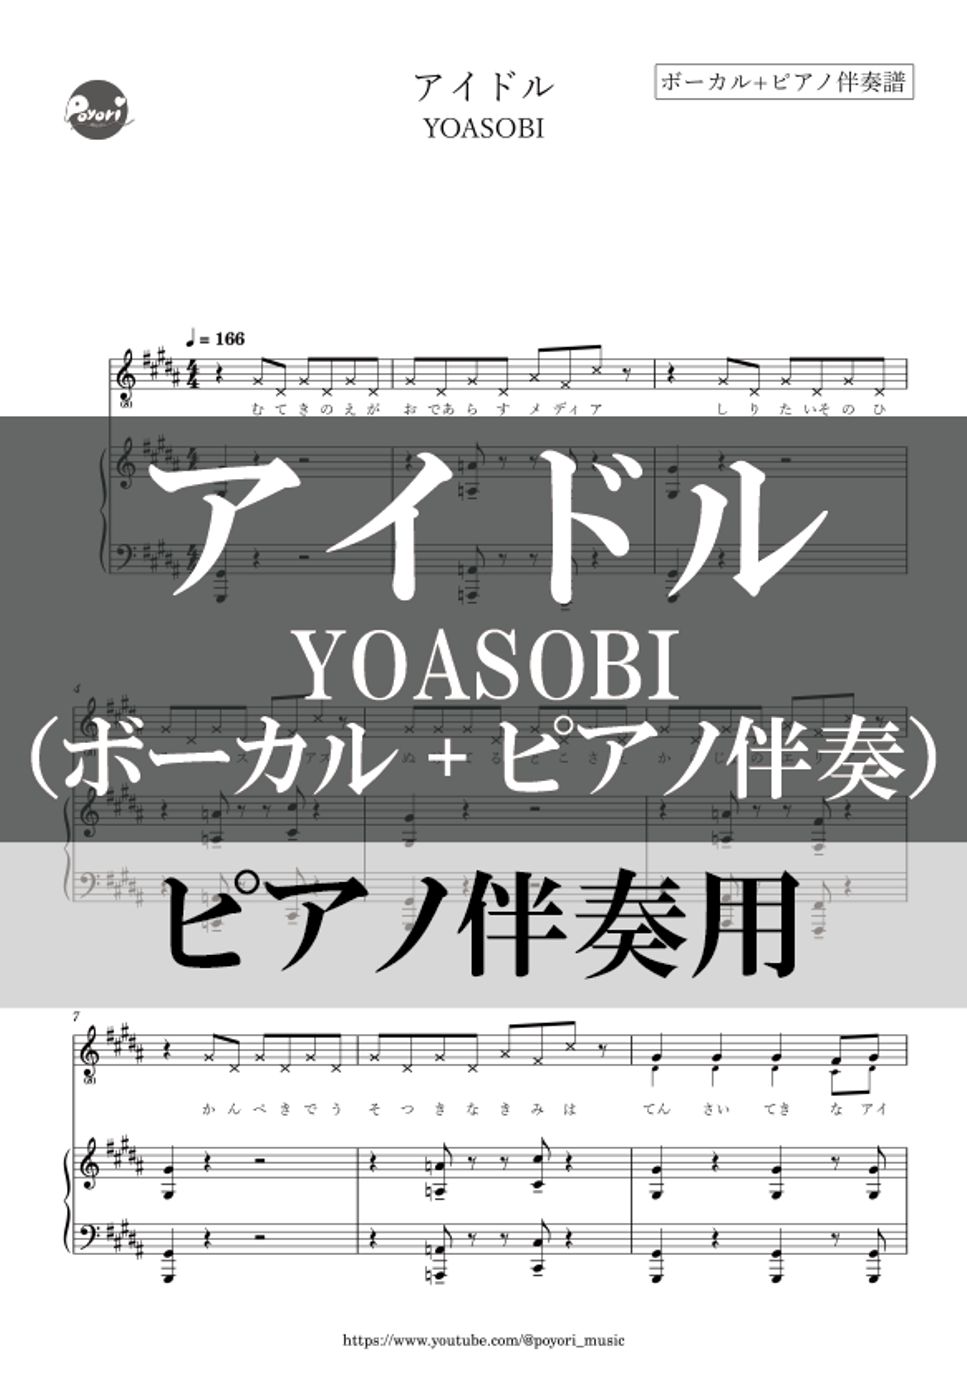 YOASOBI - アイドル (メロディ/歌詞/ピアノ伴奏) by poyori